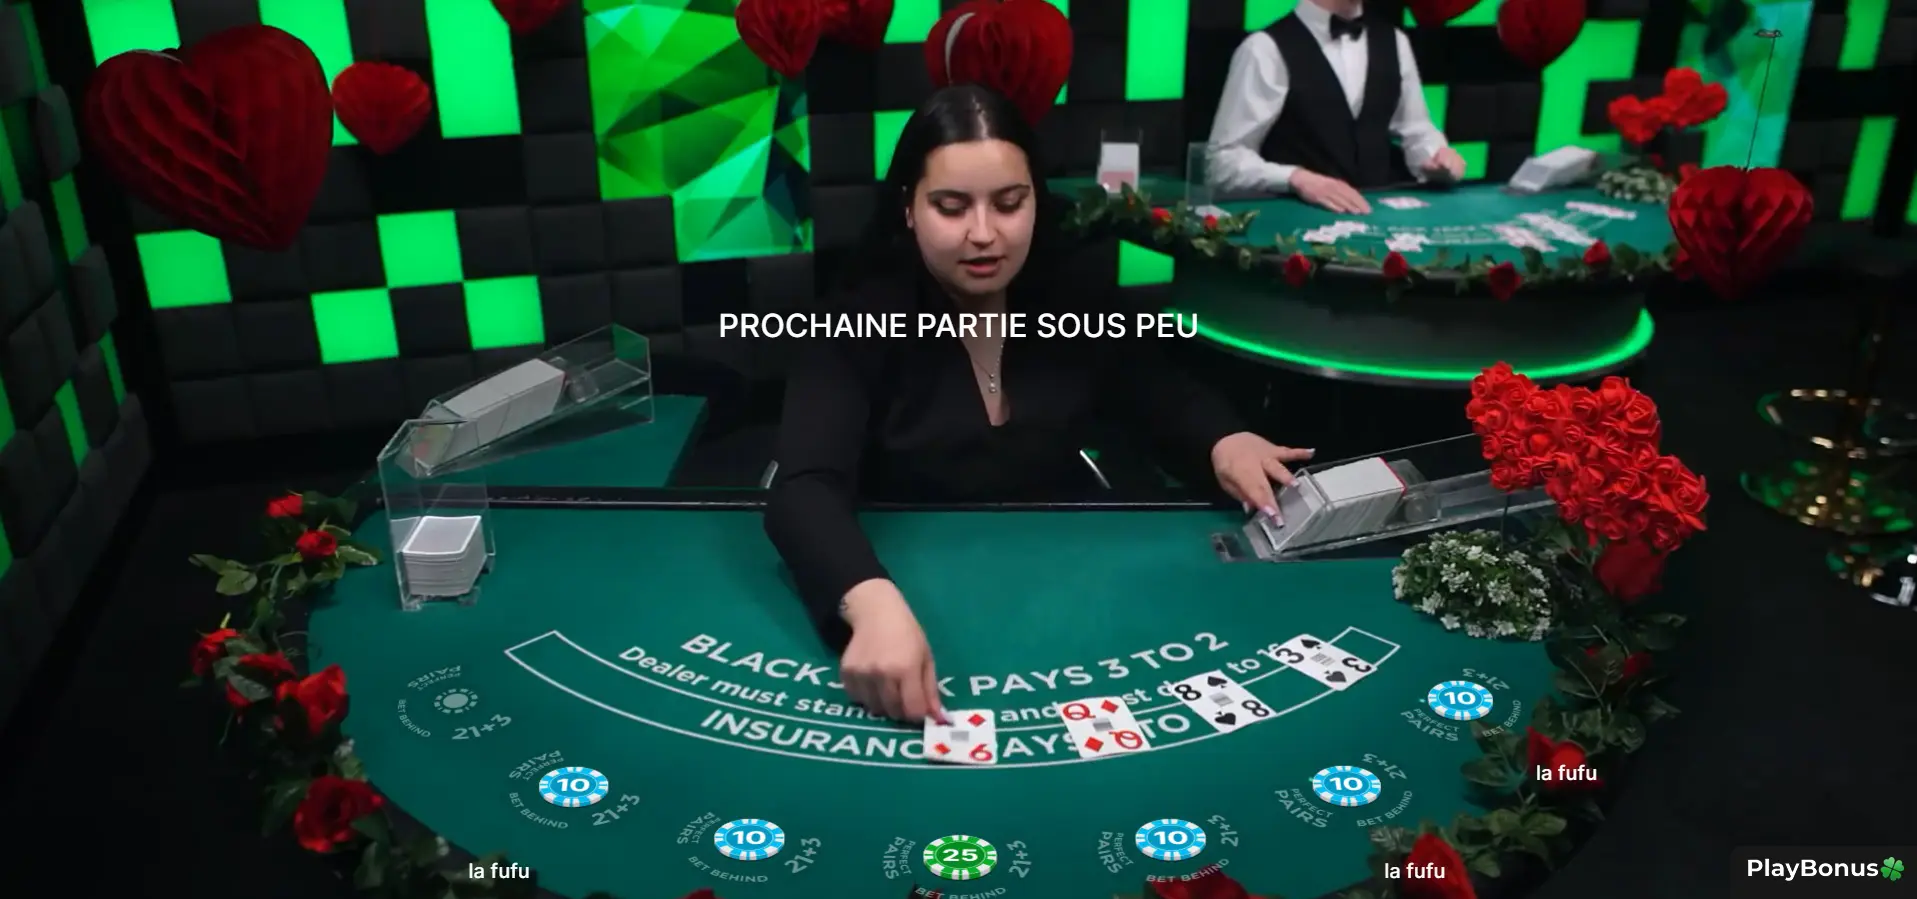 blackjack croupière casino en ligne cresus